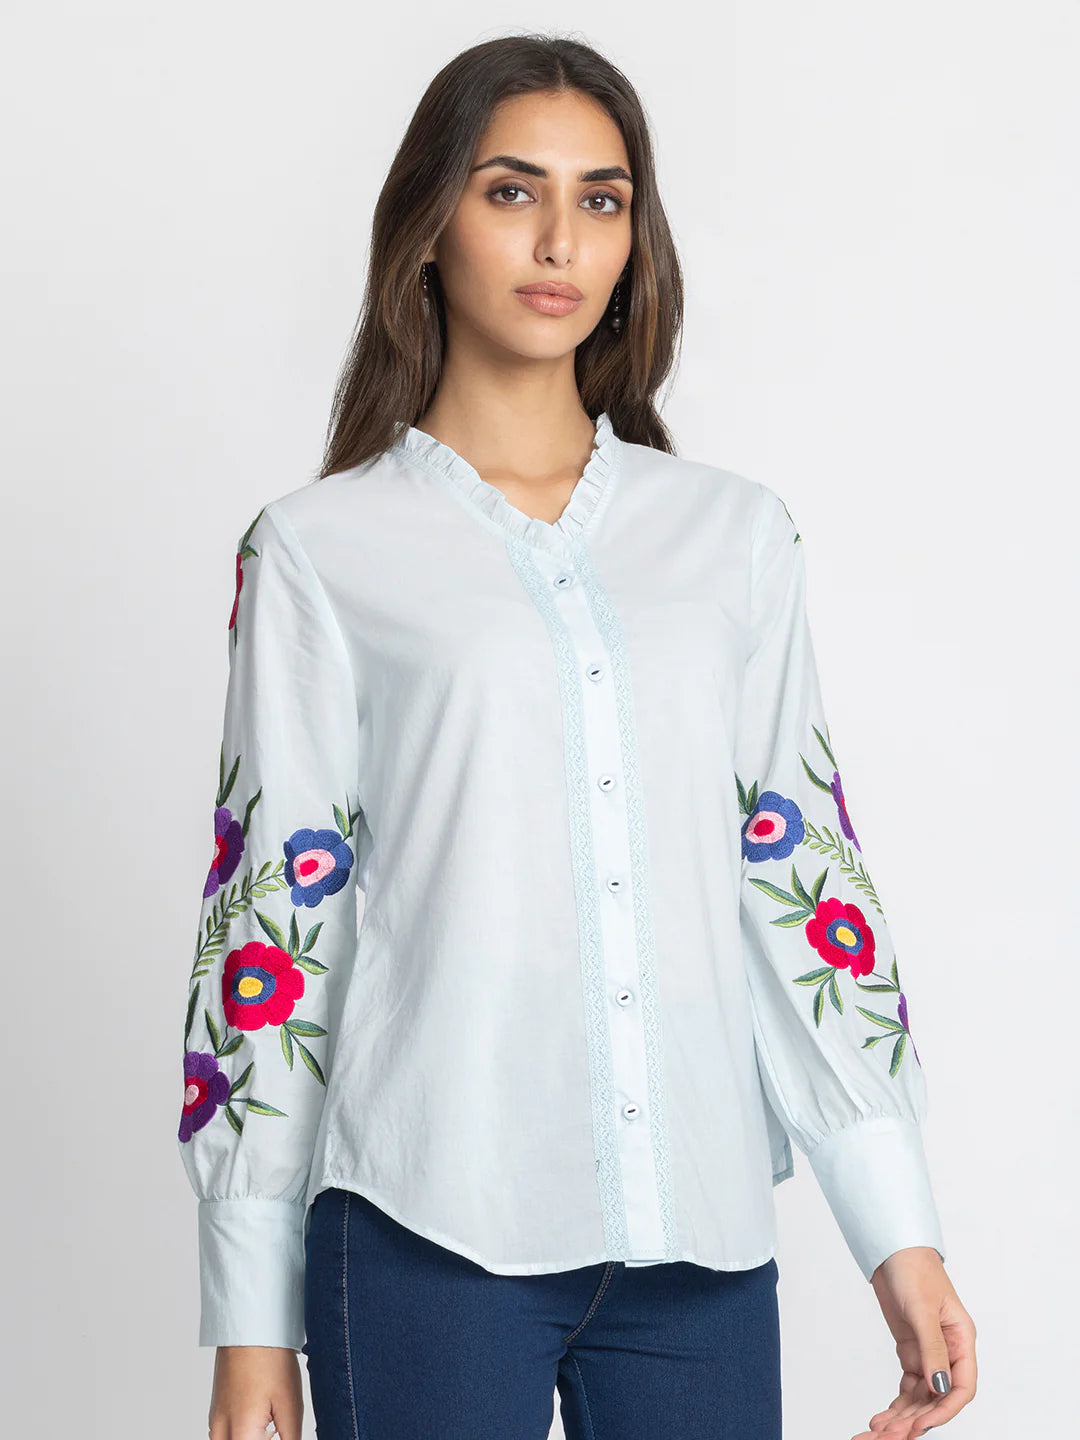 Blue Button-Down Shirt for Women | Whimsical Blue Embroidered Buttondown Shirt